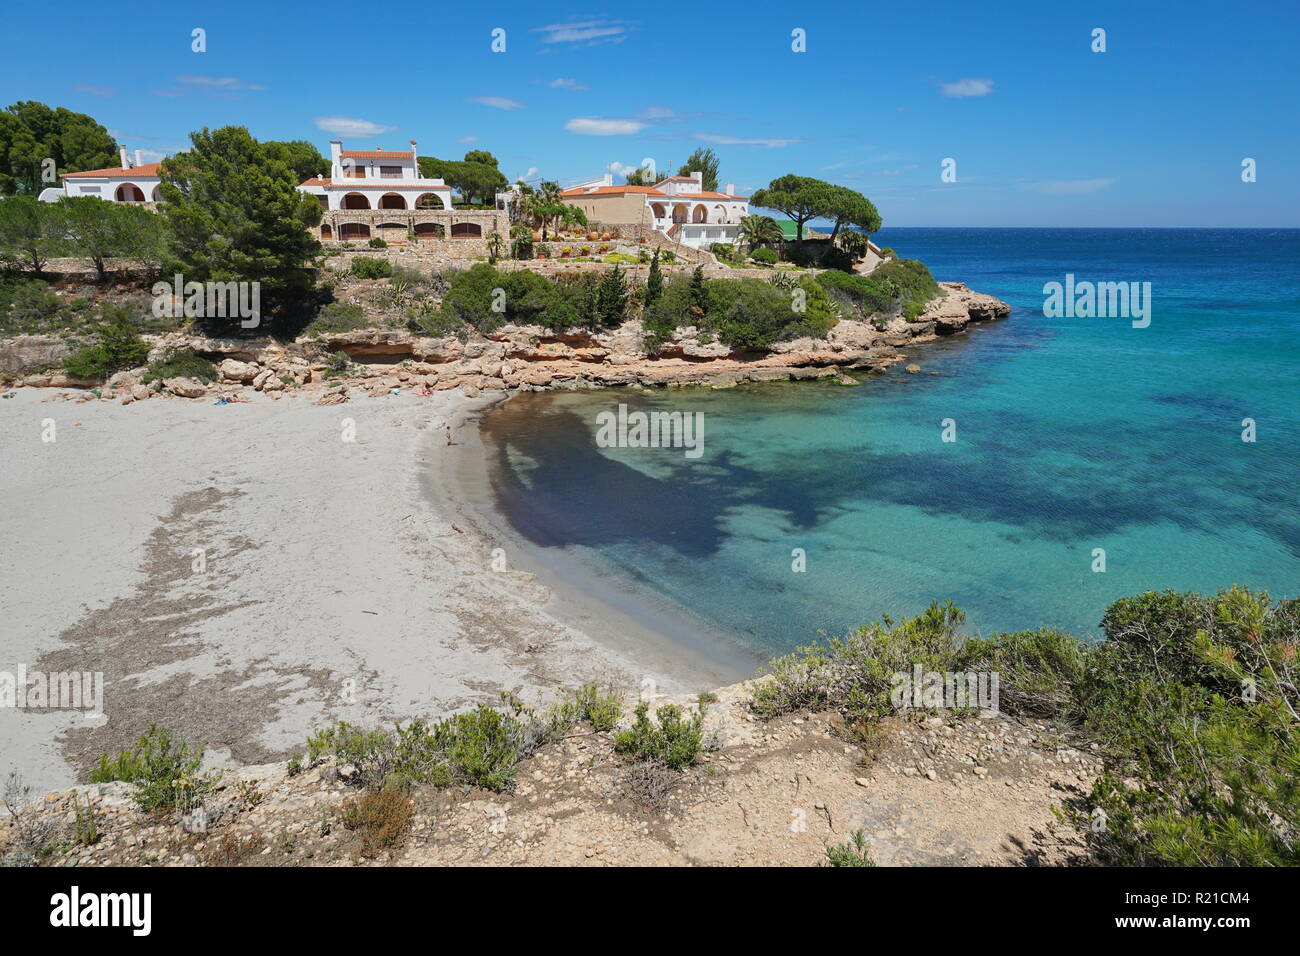 Mediterranean cove with a sandy beach and houses on the Costa Dorada in Spain, Cala Estany Tort, Catalonia, L'Ametlla de Mar, Tarragona Stock Photo